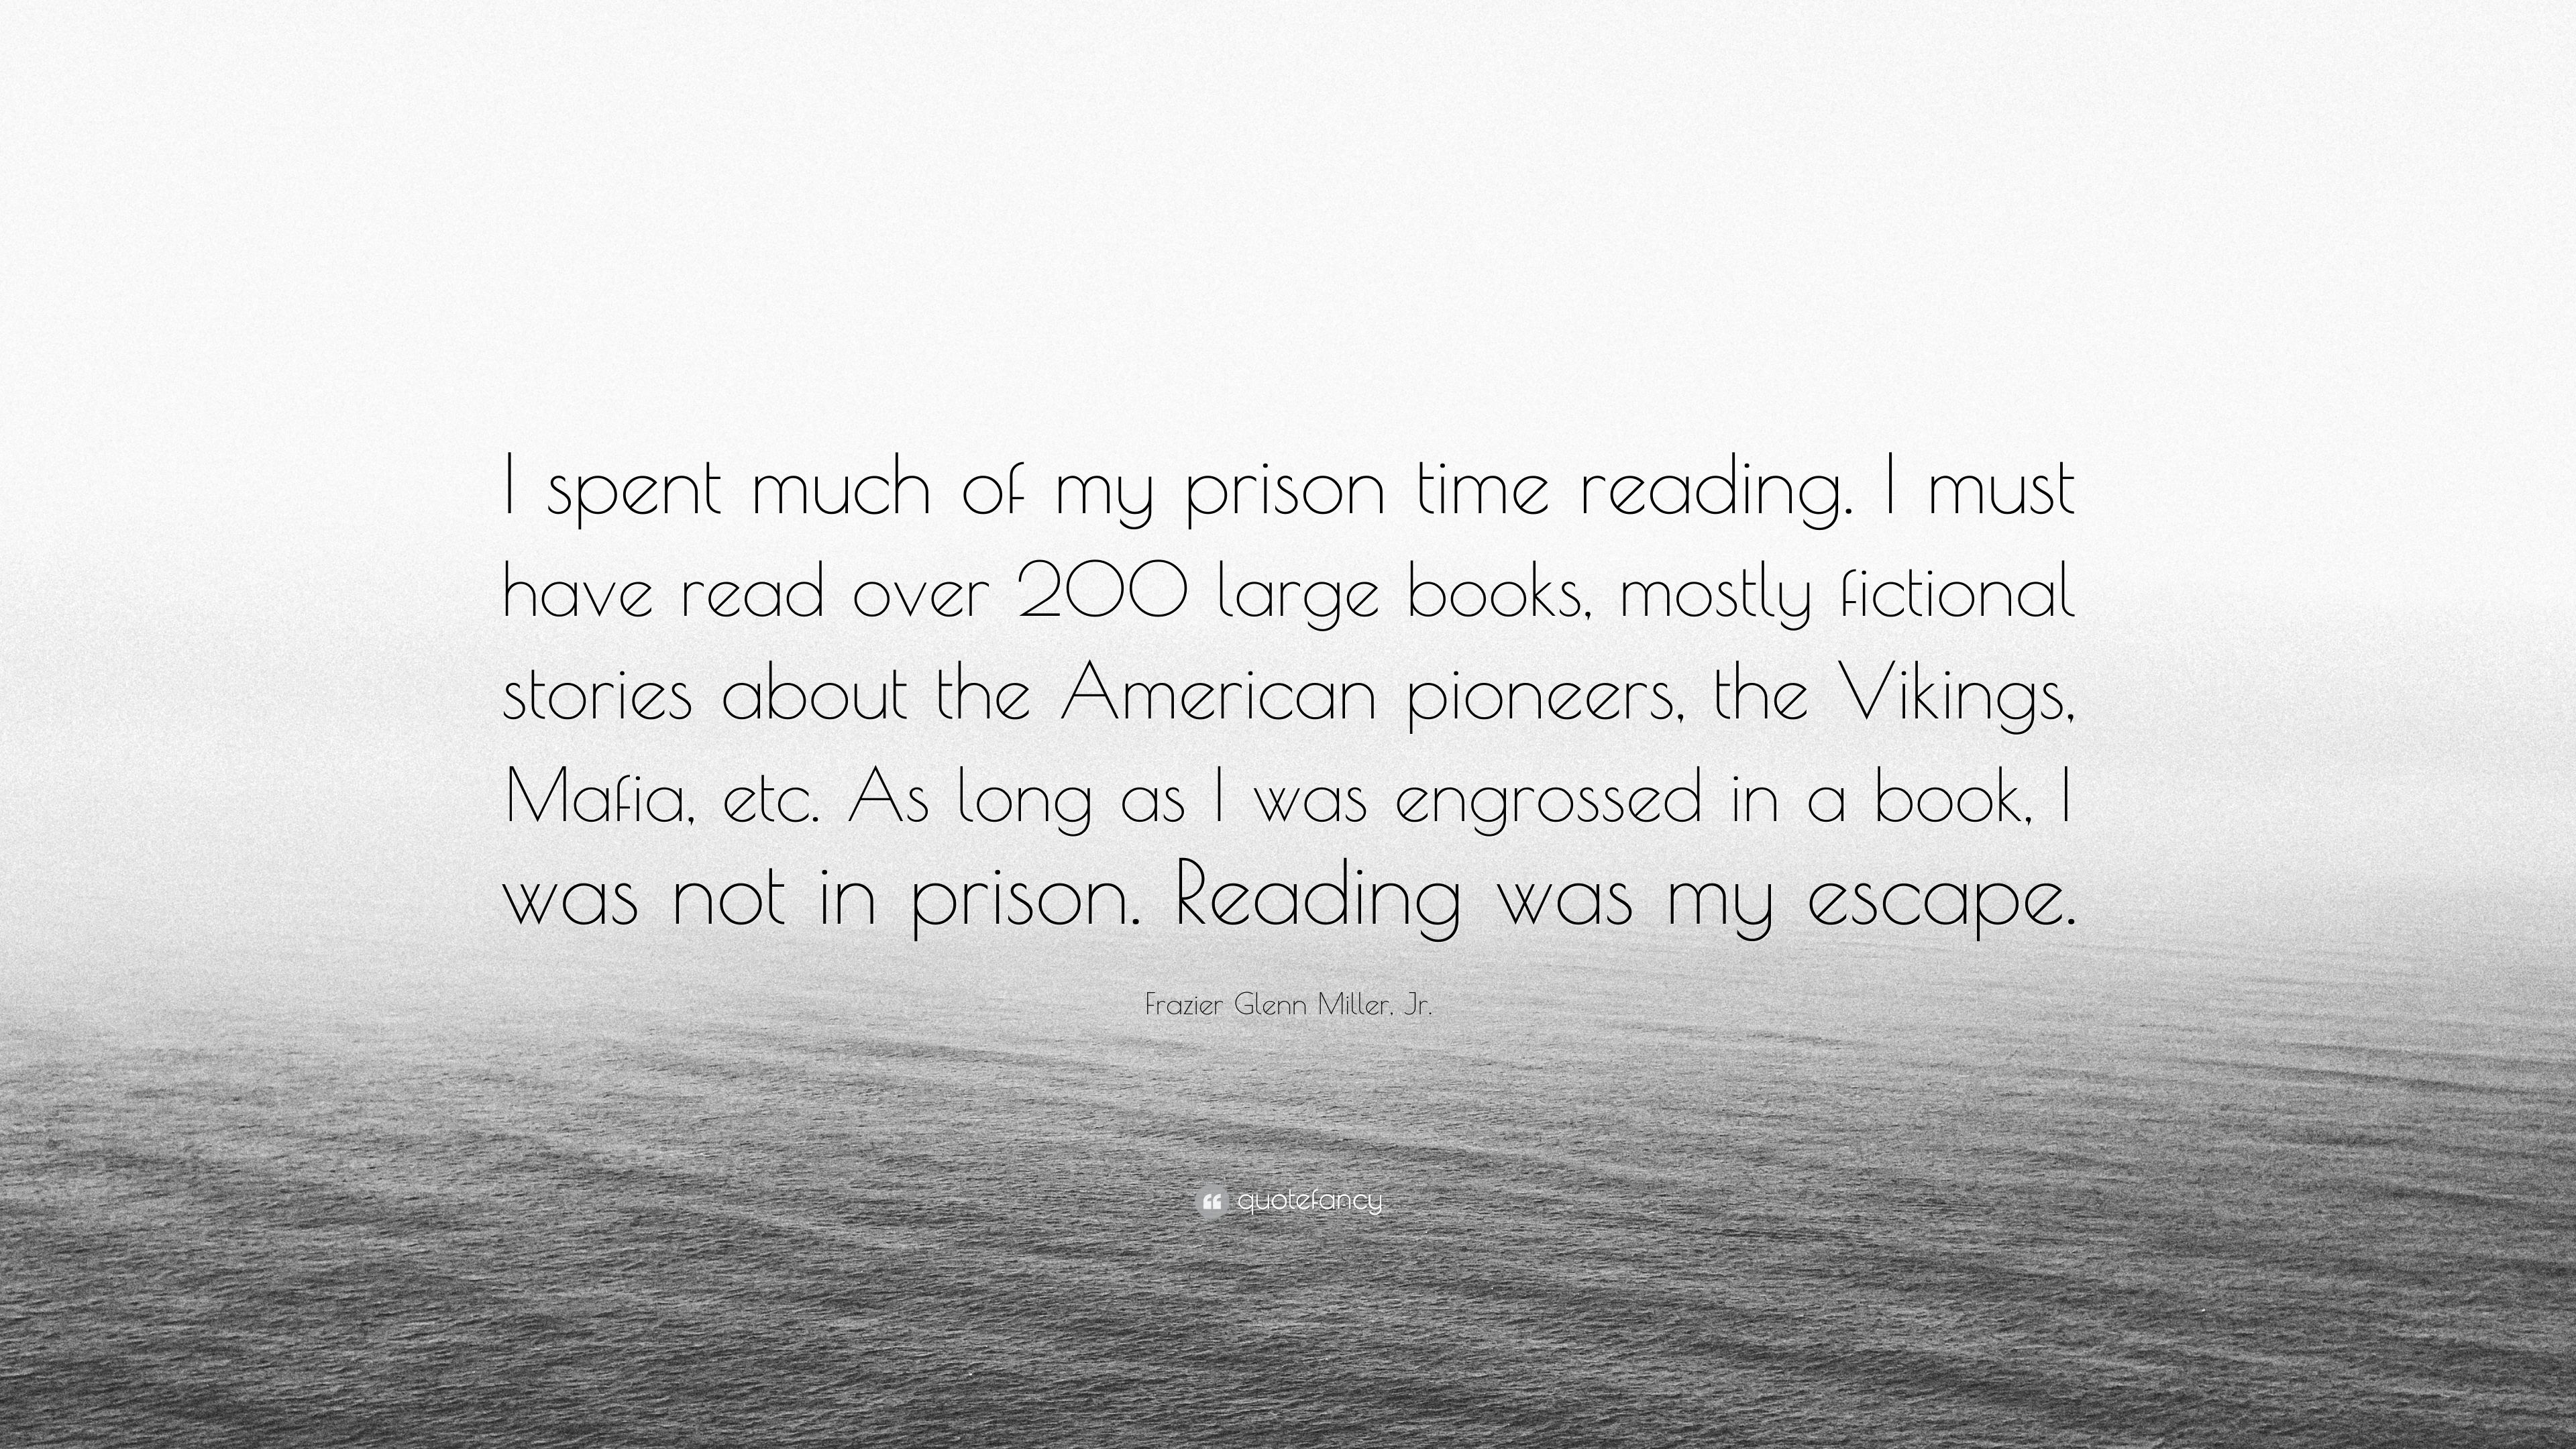 Frazier Glenn Miller, Jr. Quote: “I spent much of my prison time